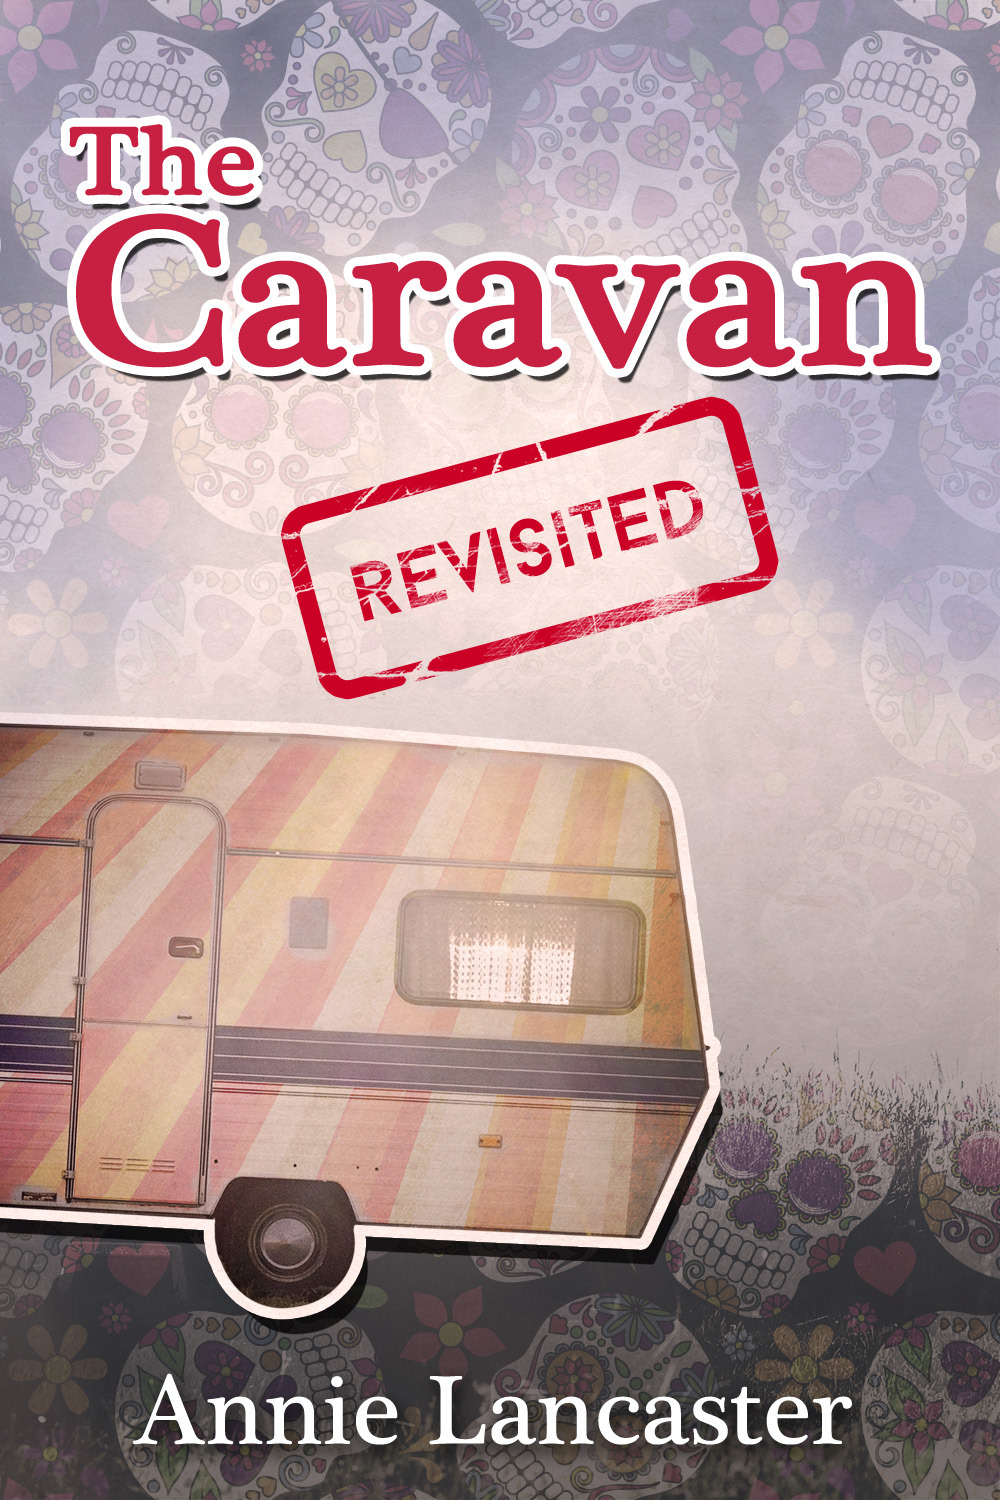 Lancaster, Annie - The Caravan Revisited, ebook